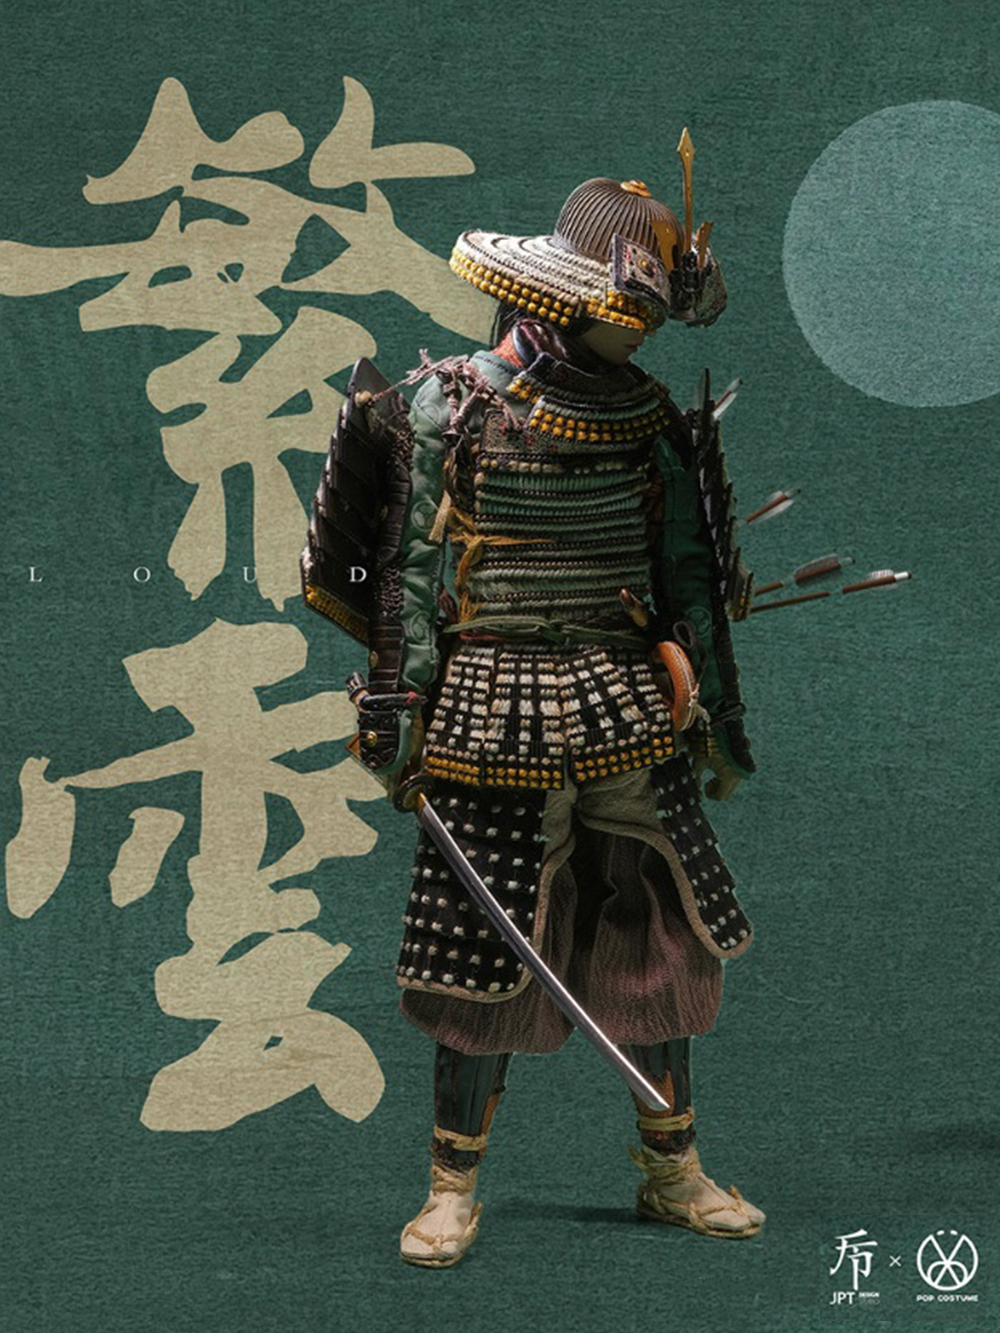 POP COSTUME X JPT design 1/6 handmade Japanese armor [Green Girl] - Fan-yun edition #JPT-002